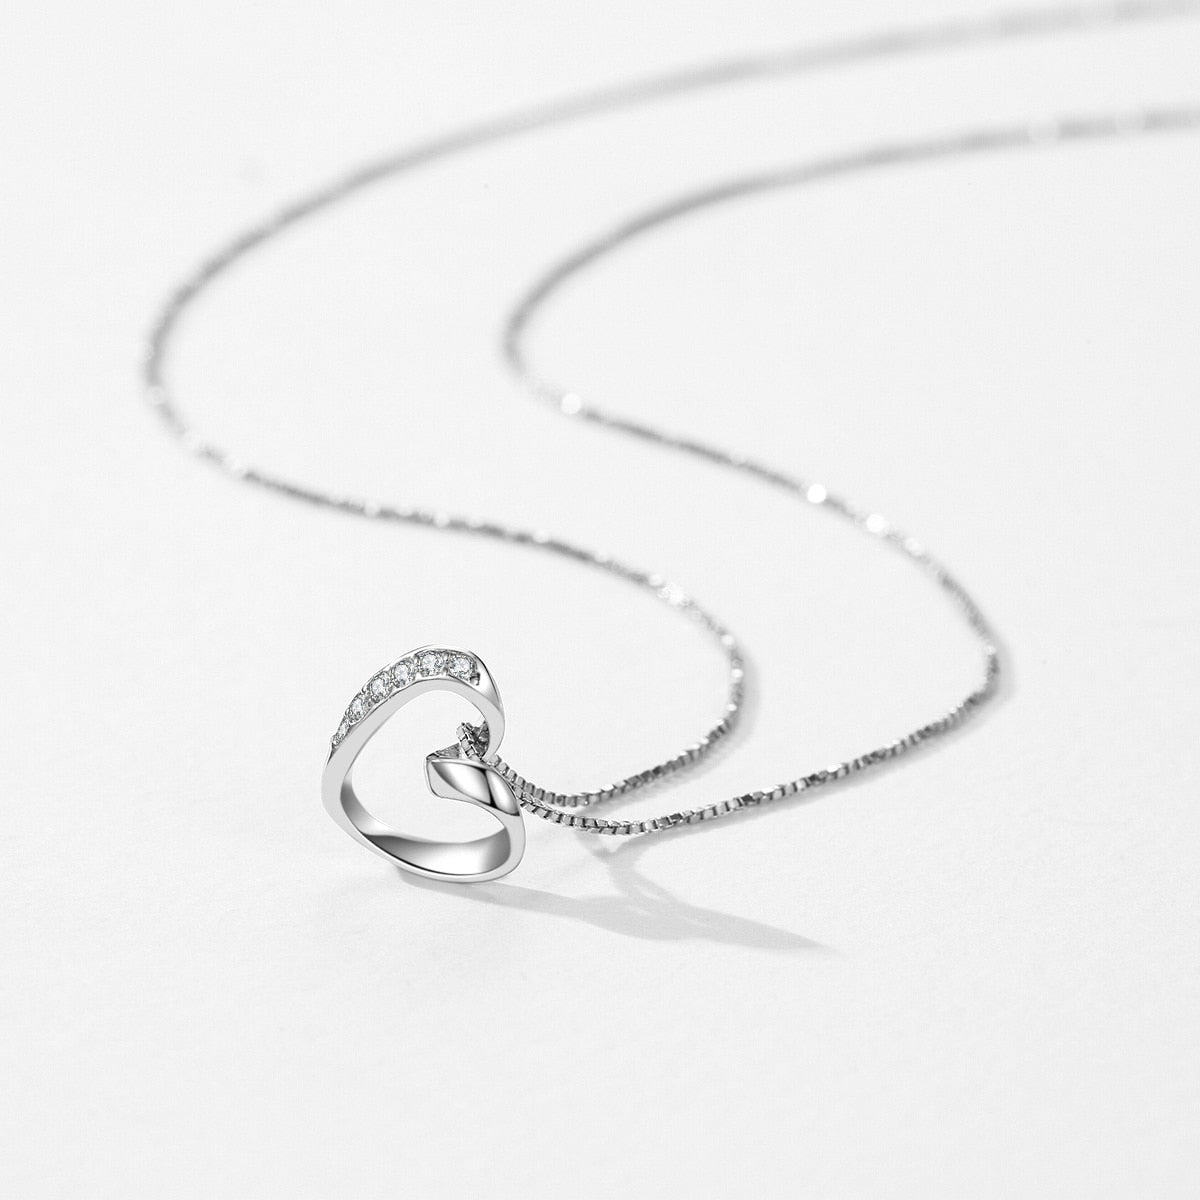 Silver Romantic Heart Necklace